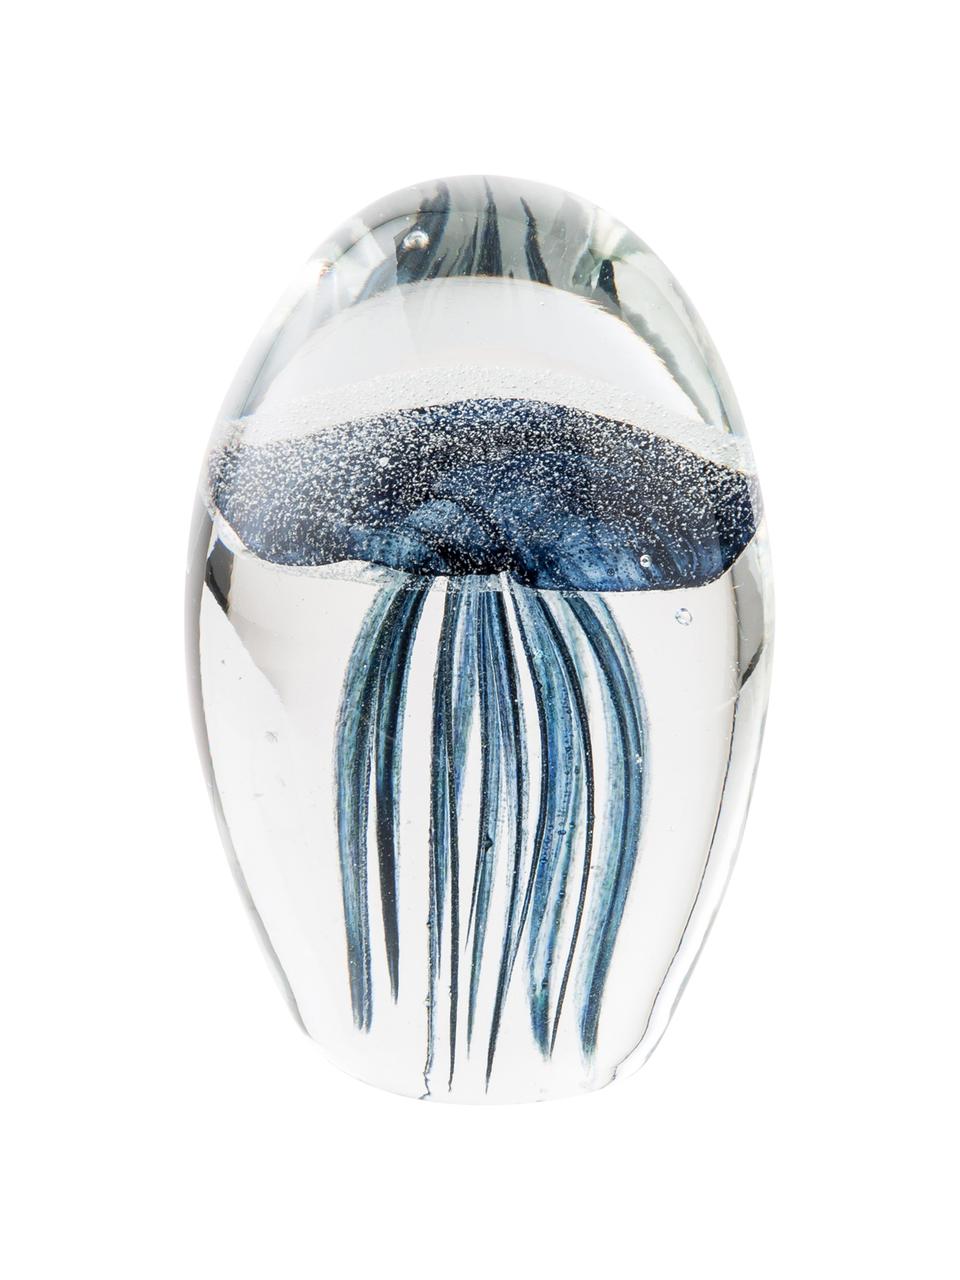 Decoratief object Tinti, Glas, Blauw, transparant, Ø 7 x H 11 cm